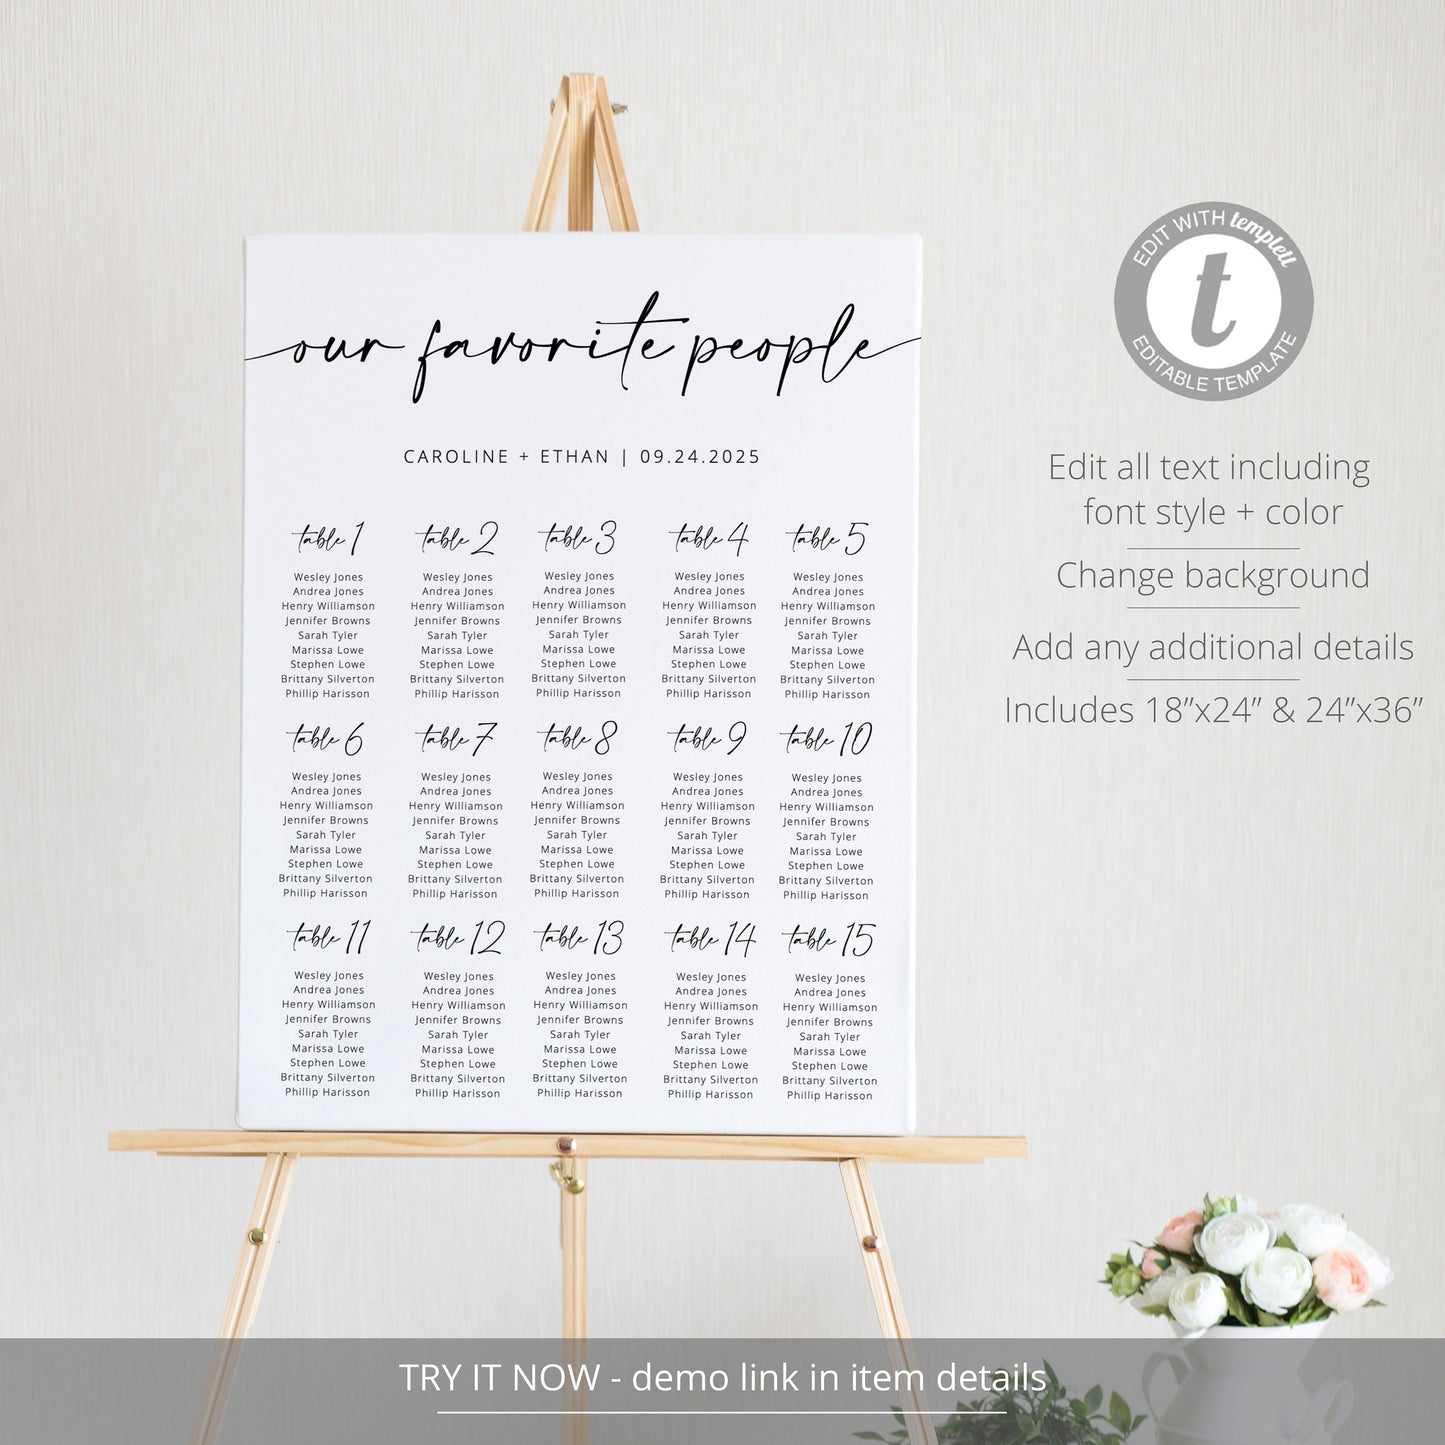 Editable Wedding Seating Chart Modern Minimalist Script Our Favorite People Wedding Table Plan Template